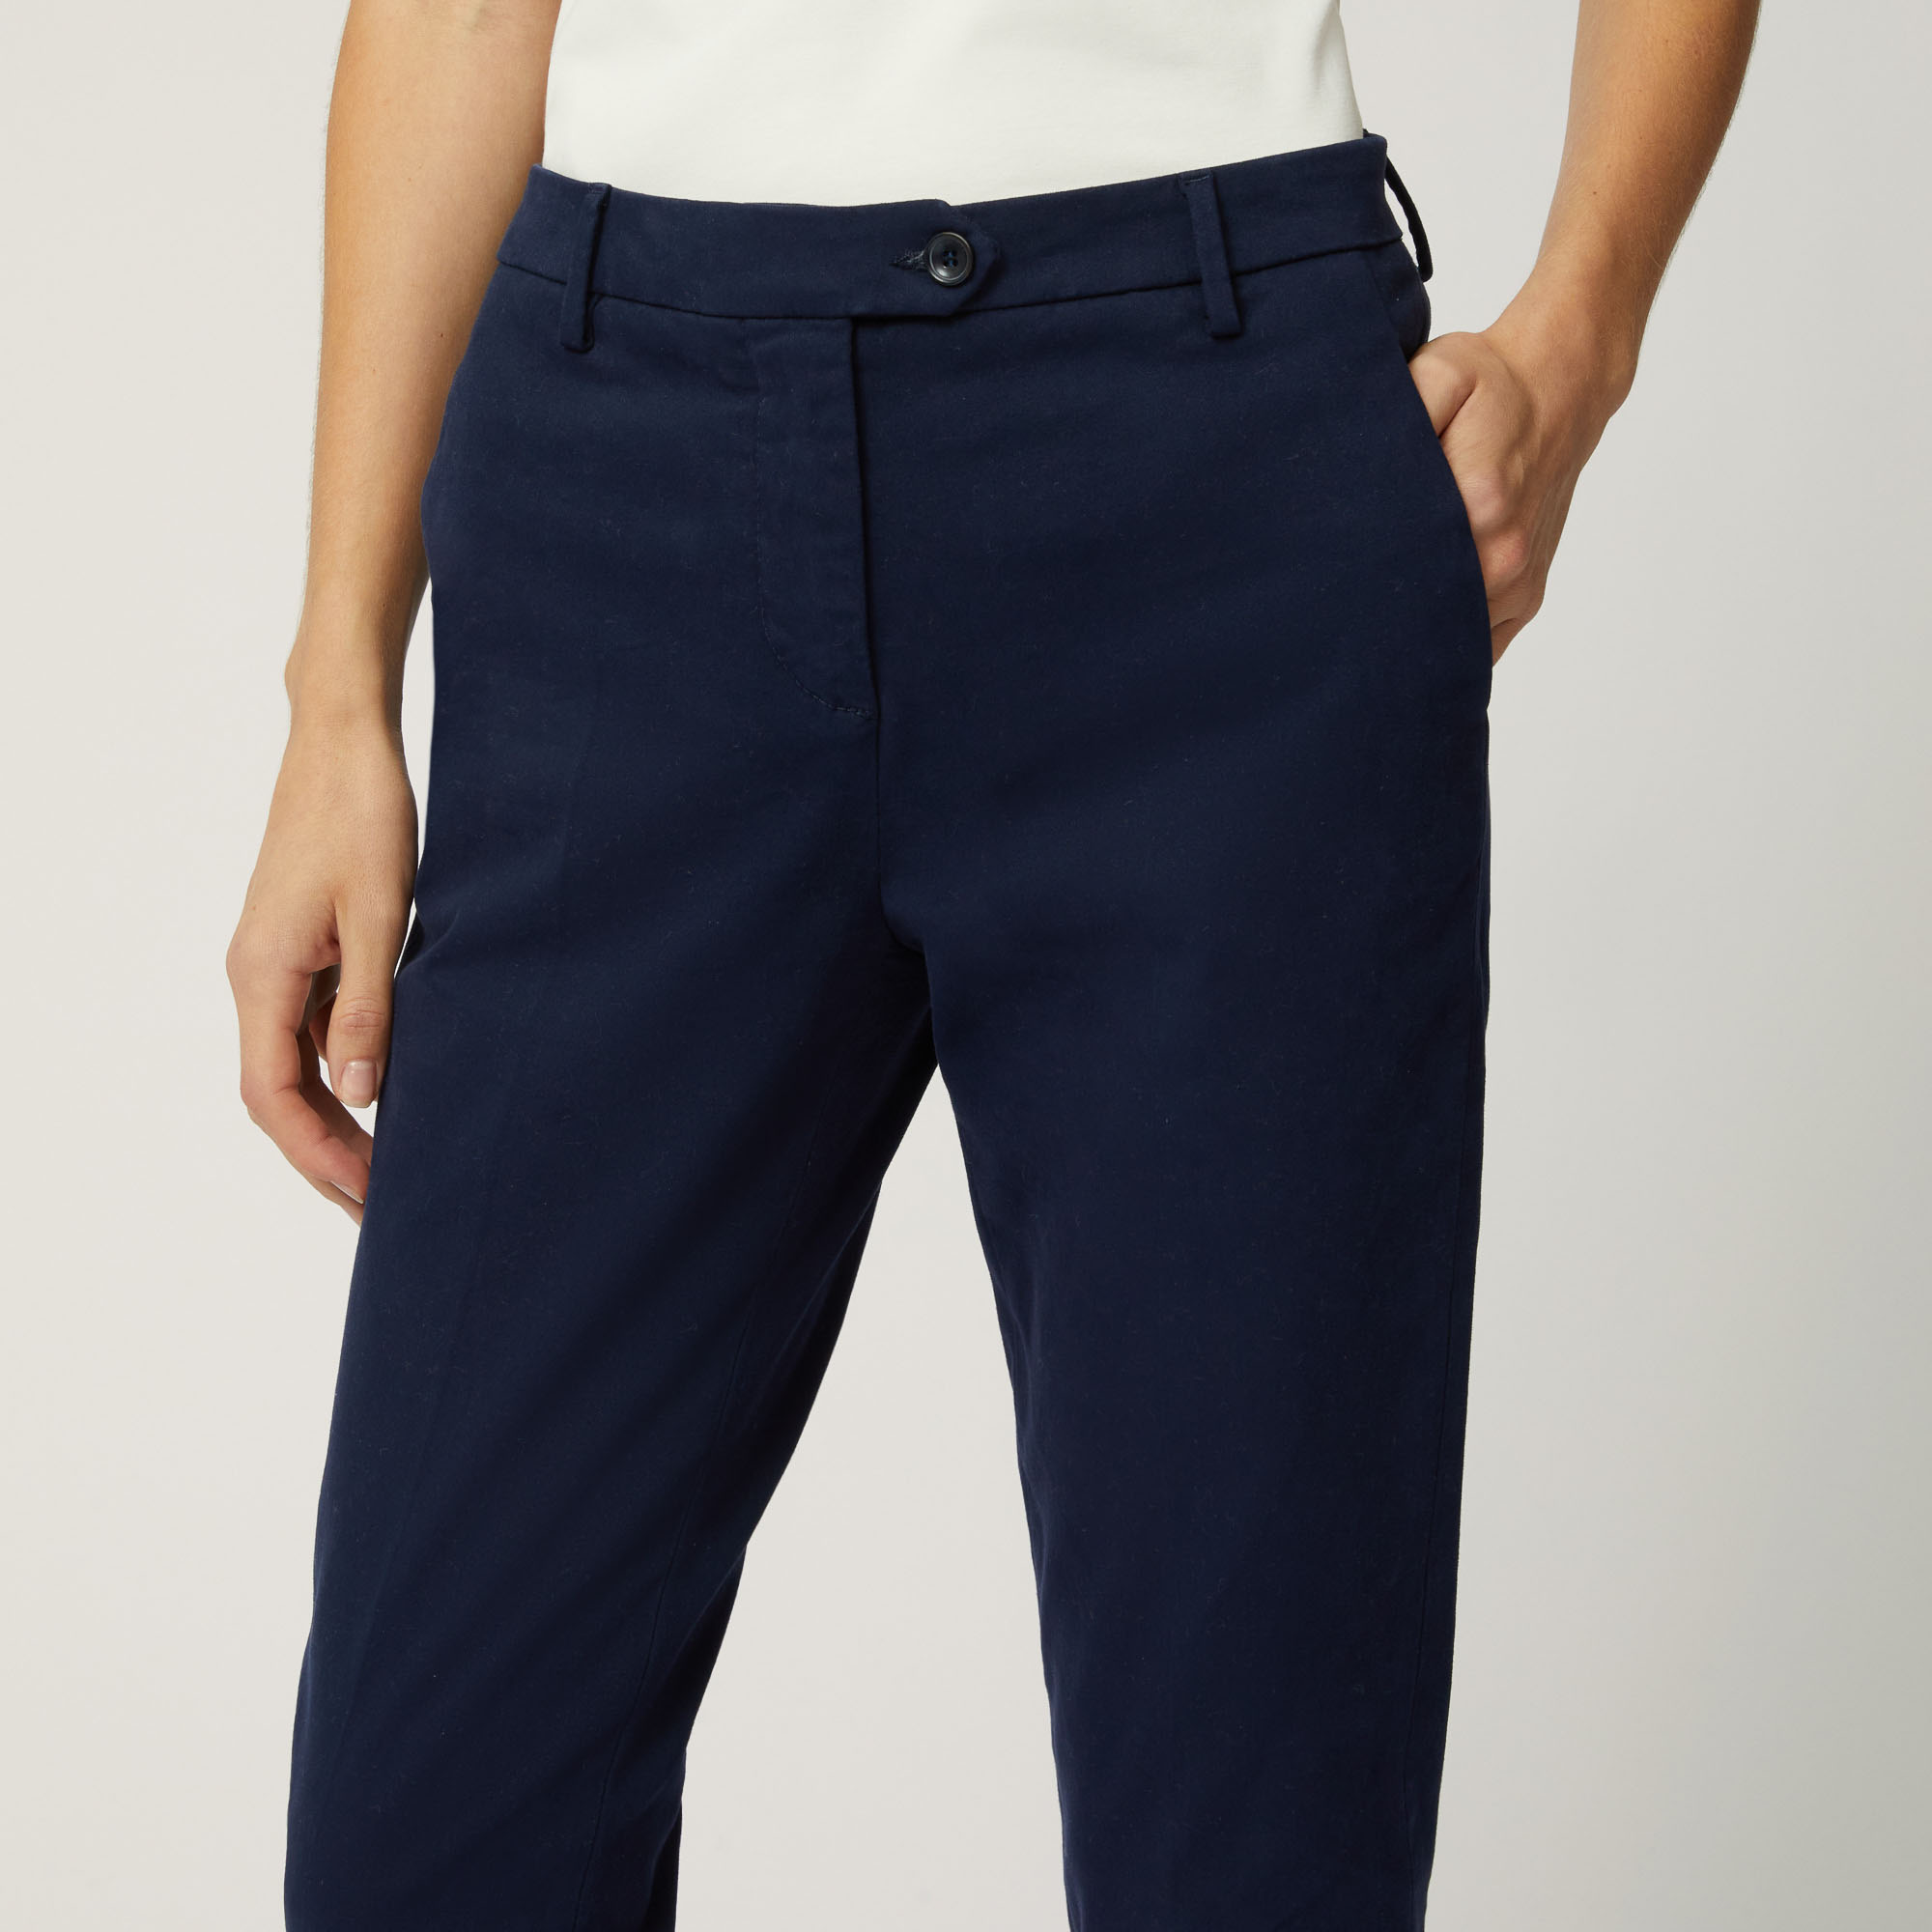 Pantalone Chino In Cotone Stretch, Blu Navy, large